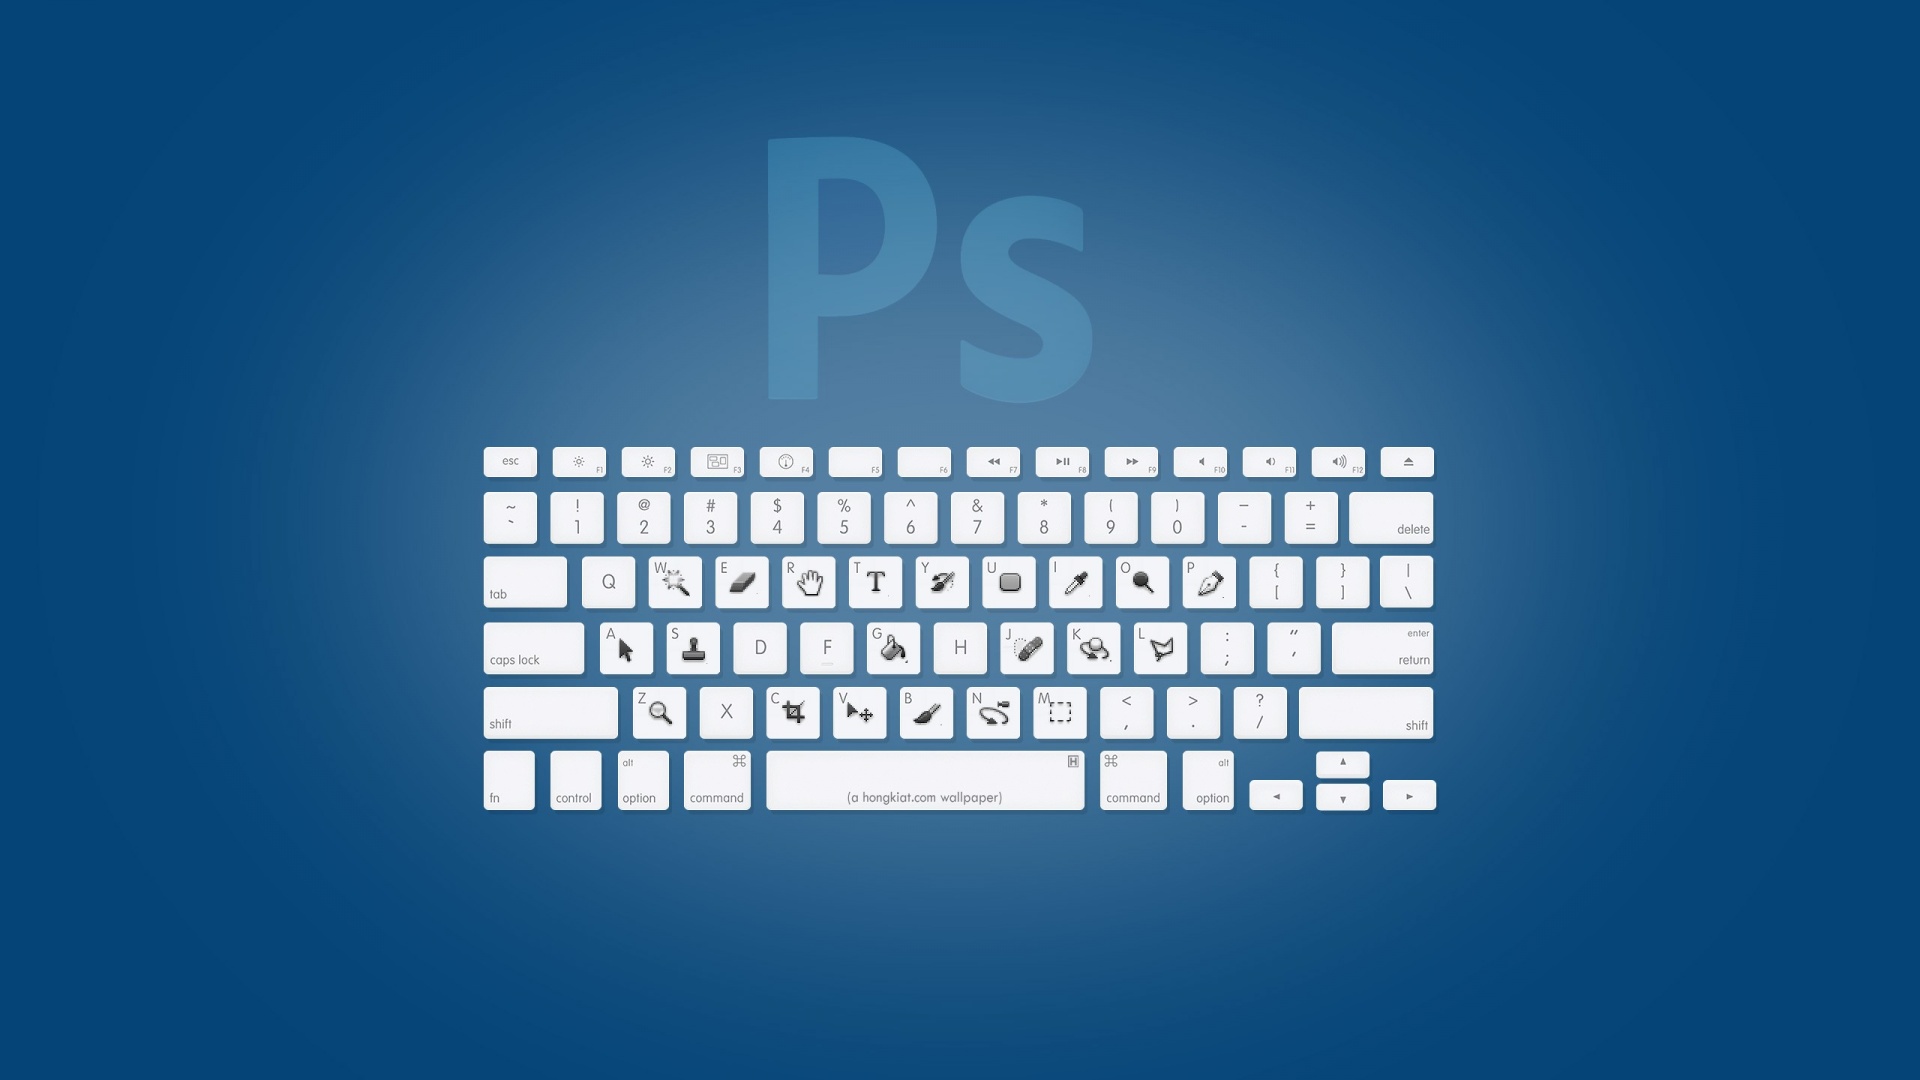 Adobe Photoshop Keyboard Desktop Pc And Mac Wallpaper